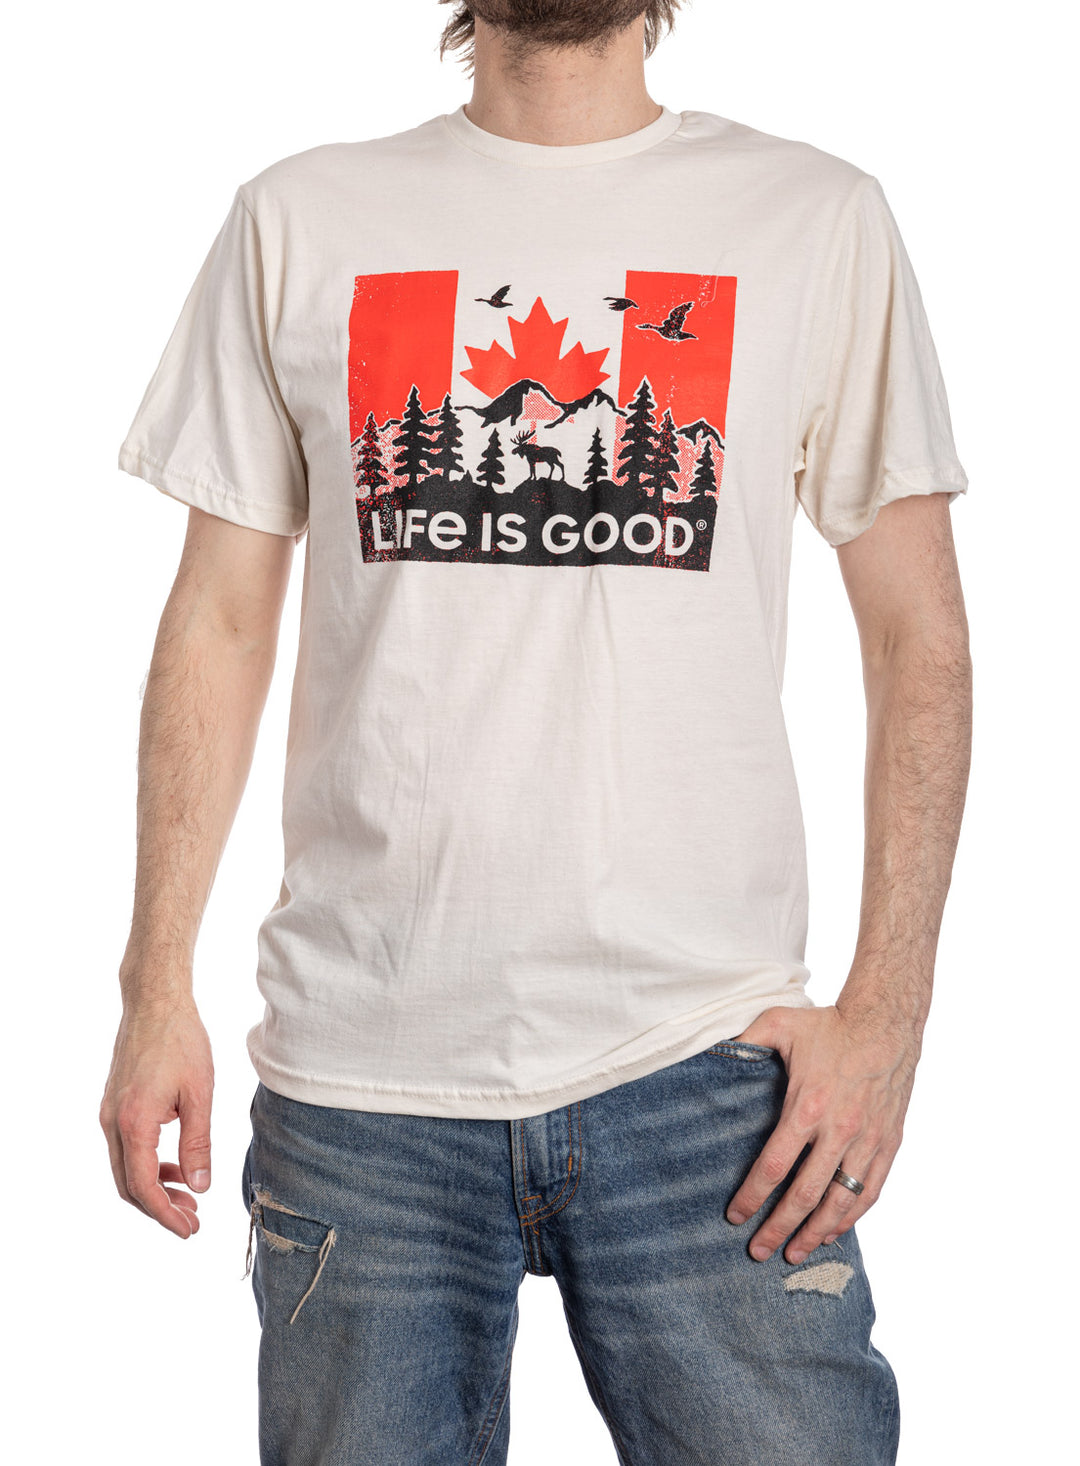 Life Is Good T-Shirt